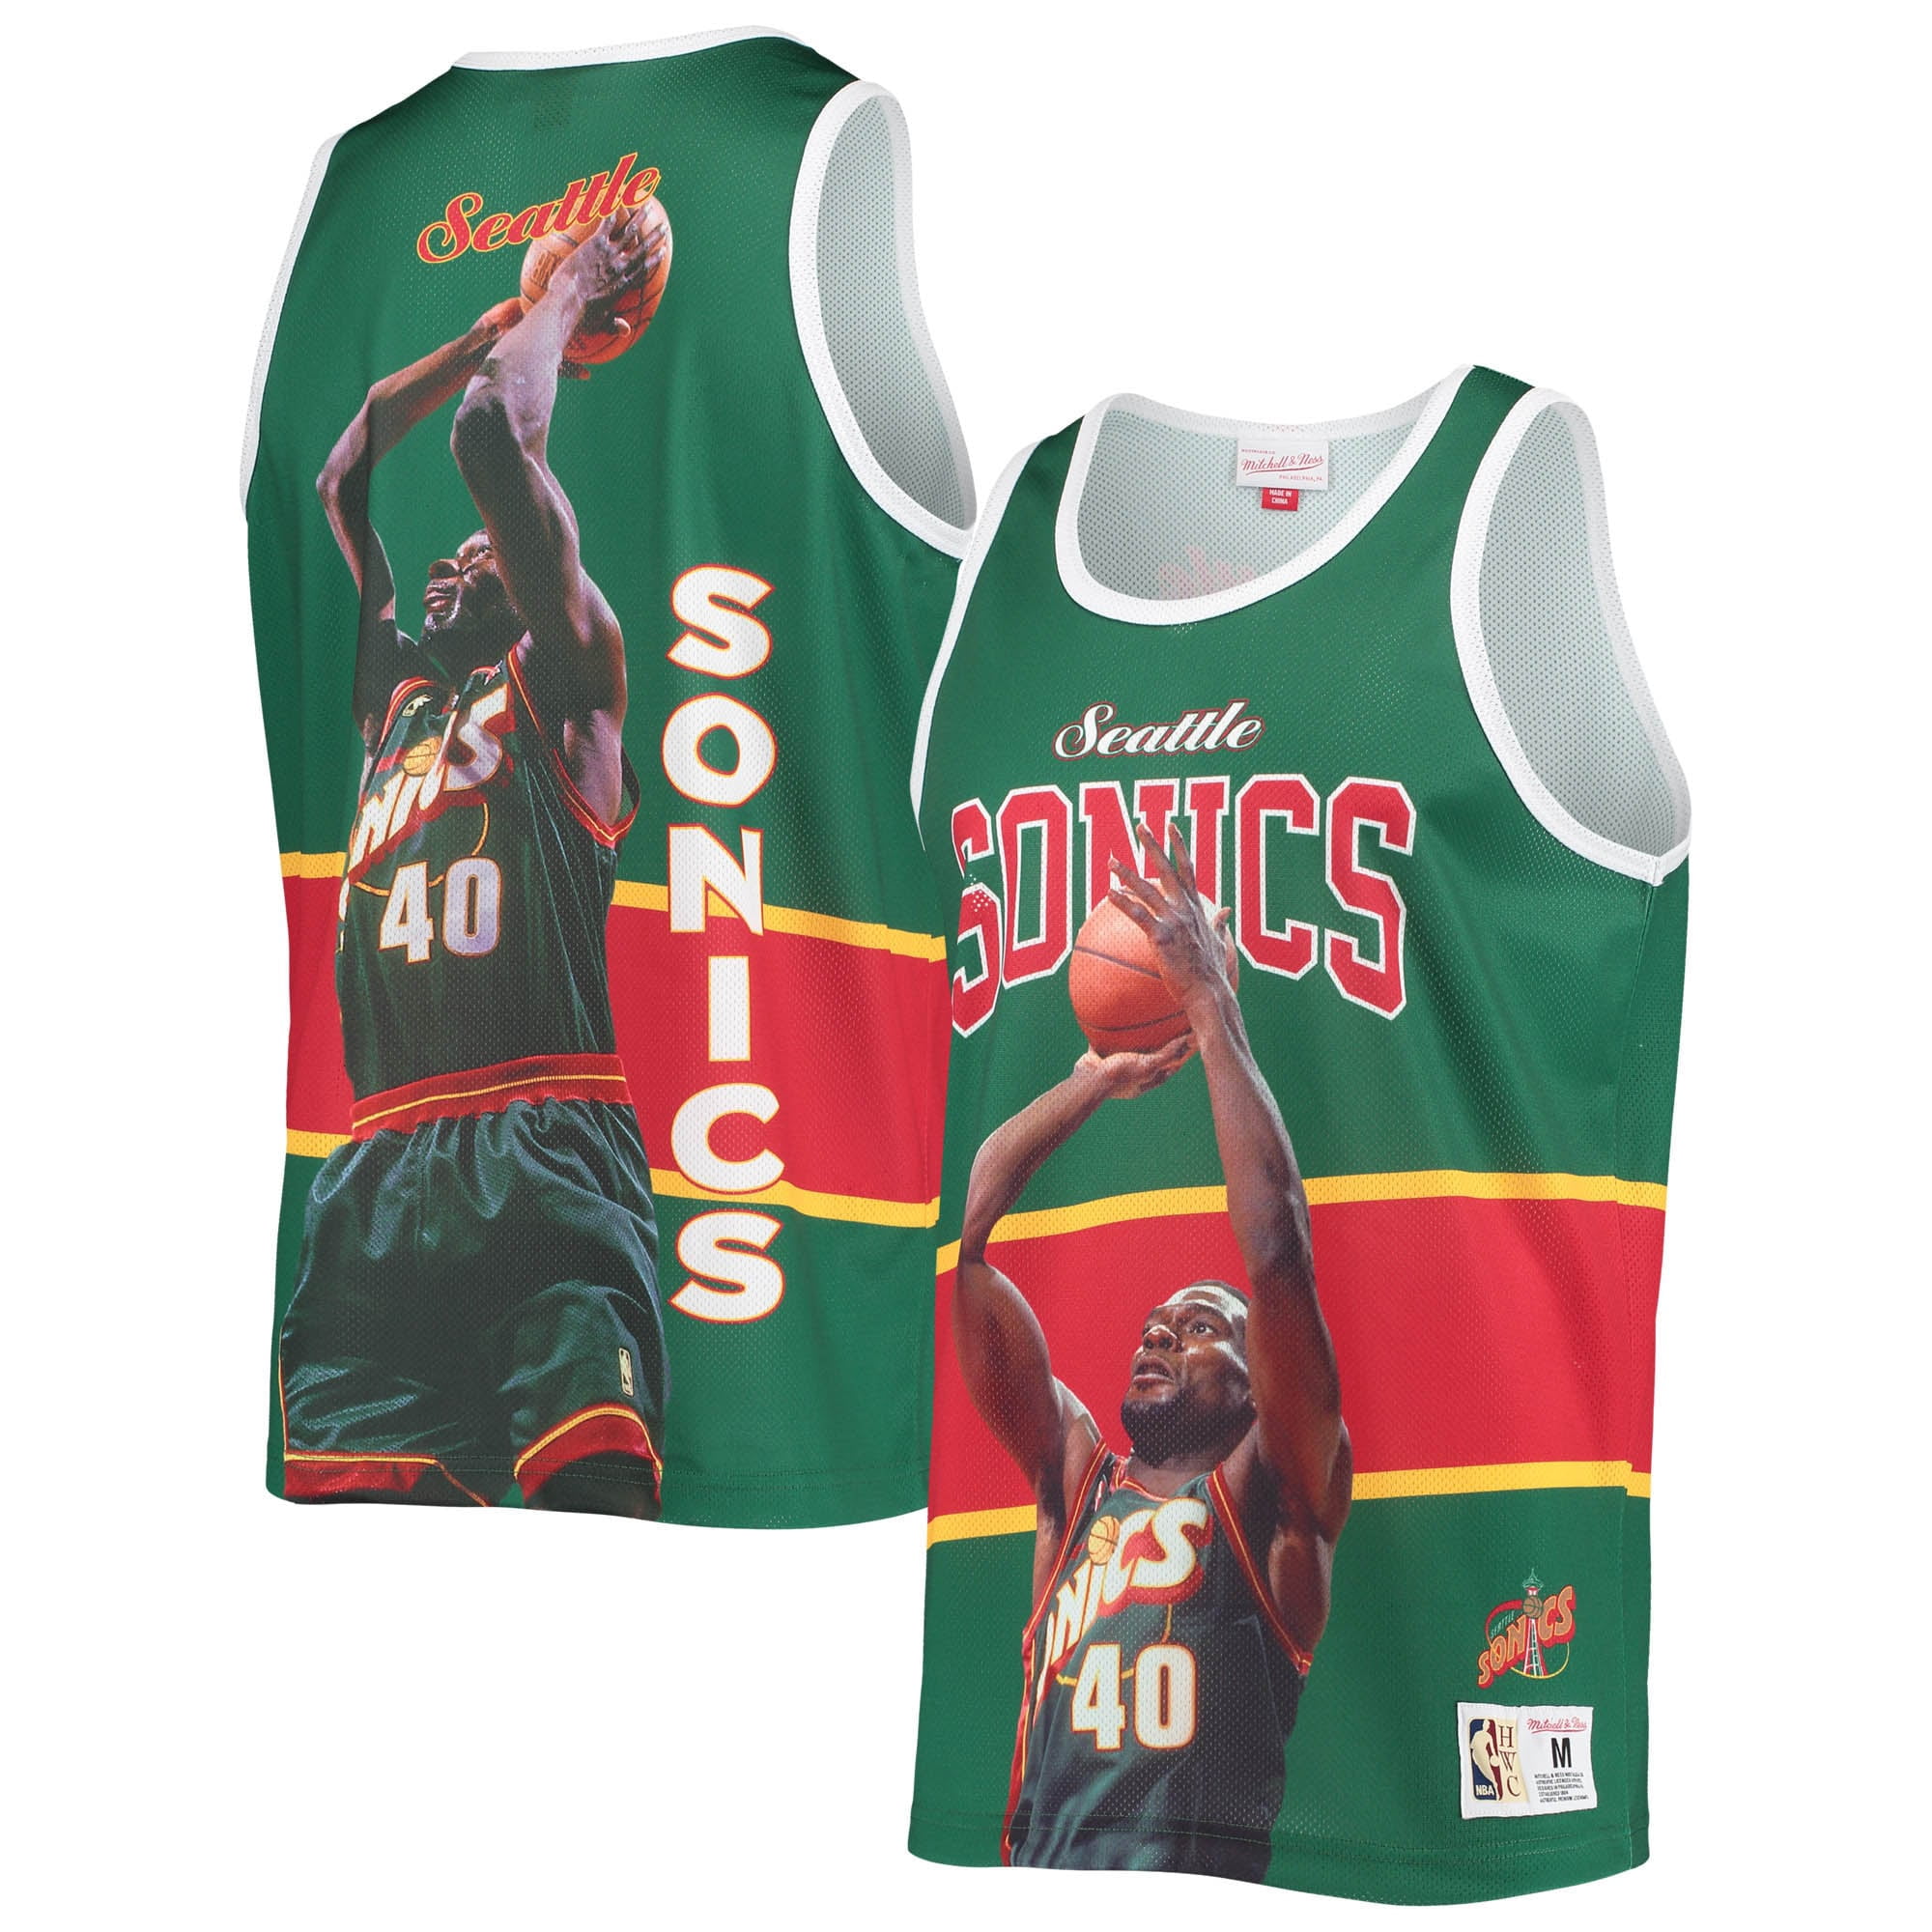 Vintage Seattle SuperSonics NBA Crewneck Sweatshirt. Tagged As A Large